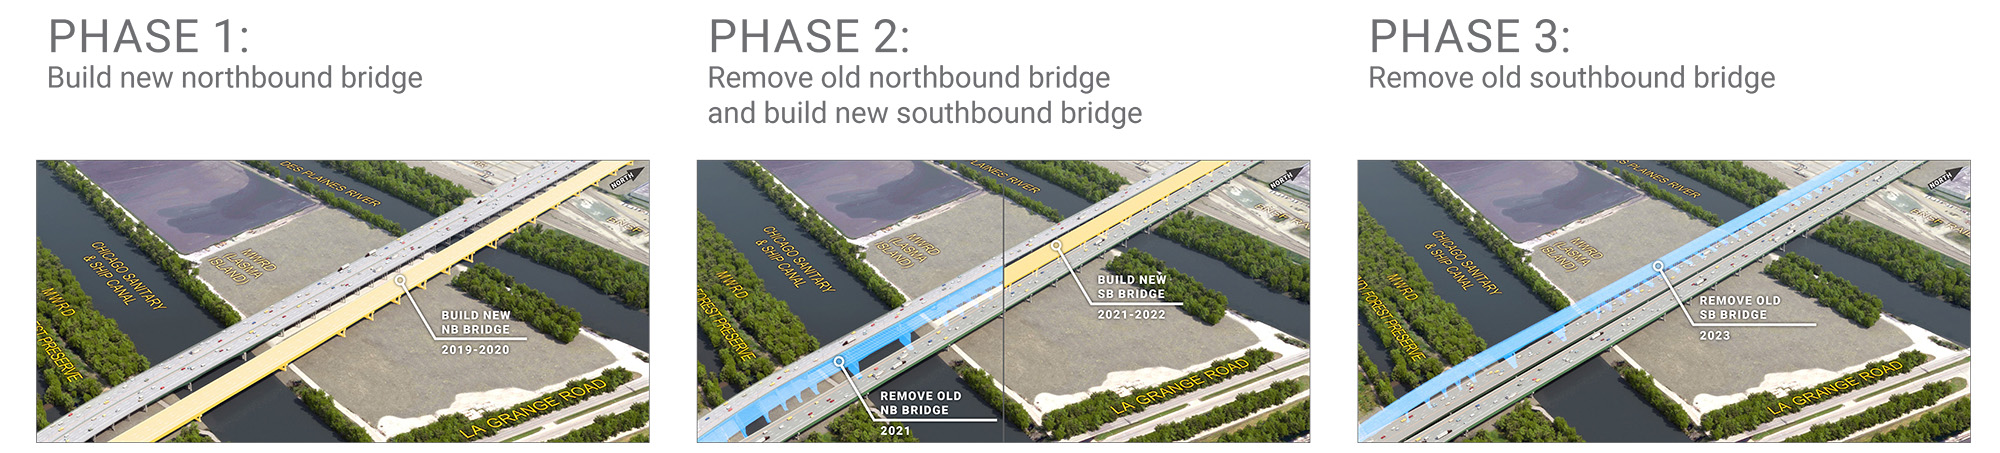 Mile Long Bridge Construction Phases Graphic